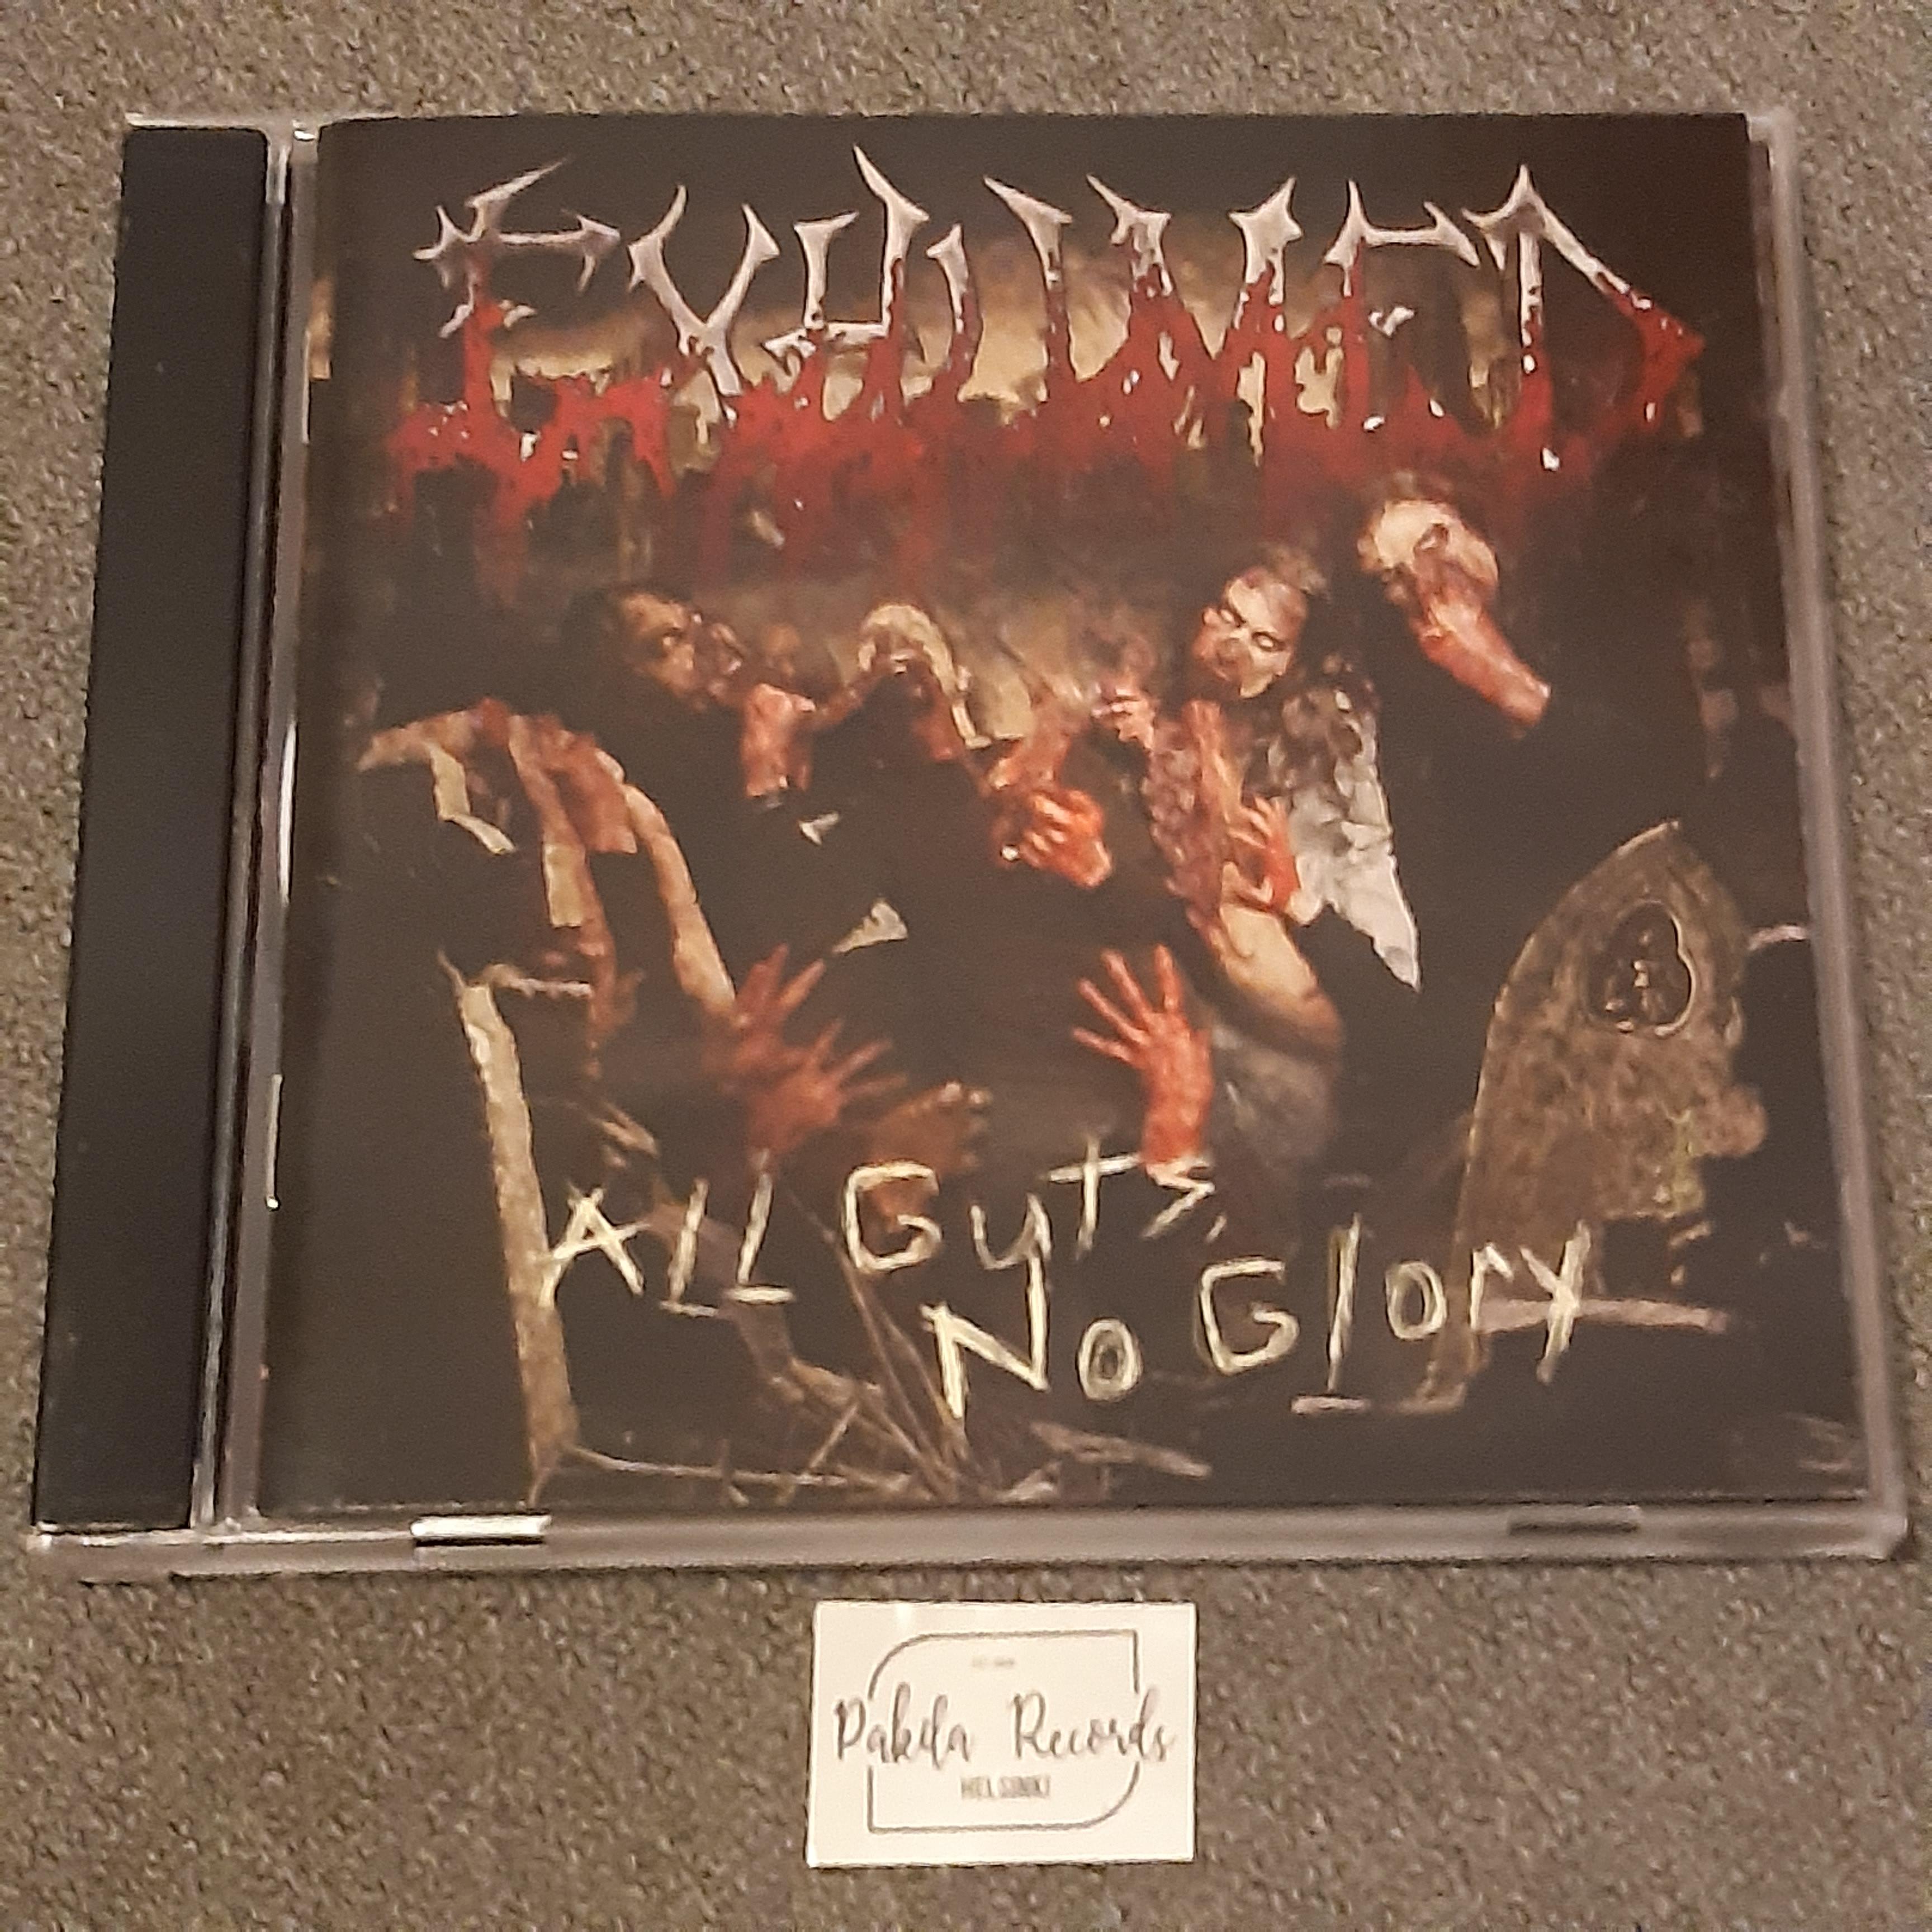 Exhumed - All Guts, No Glory - CD (käytetty)